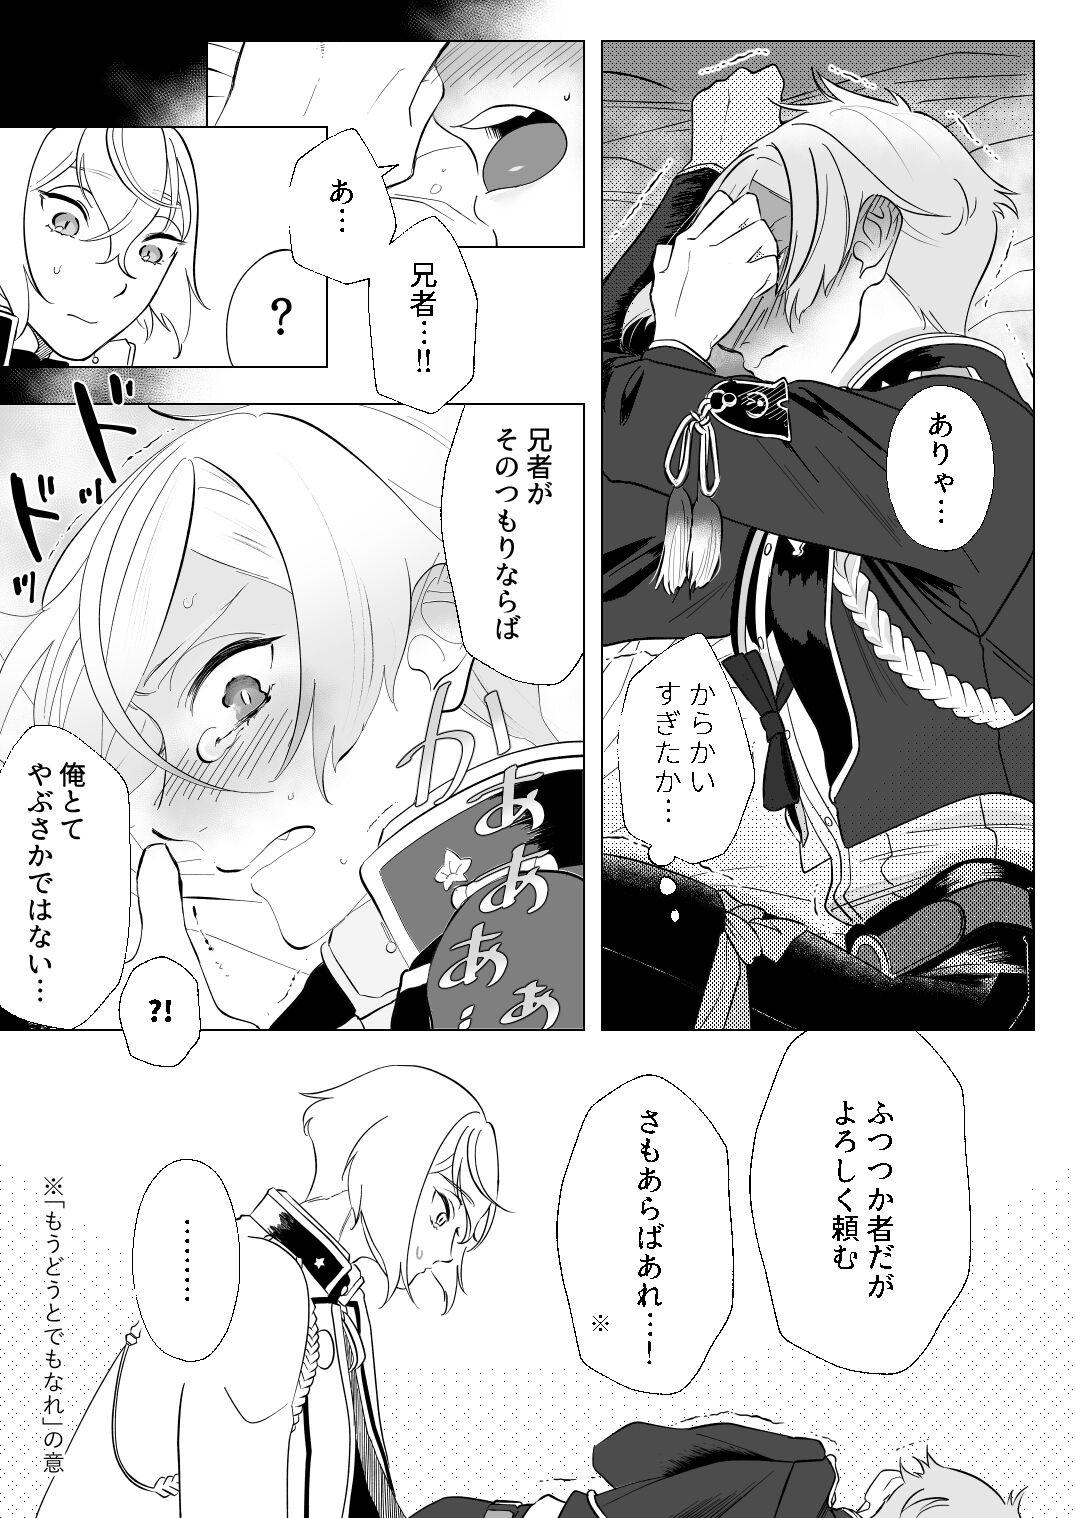 Interracial Sex Gendai Ensei! Heisei no Kioku - Touken ranbu Sharing - Page 11